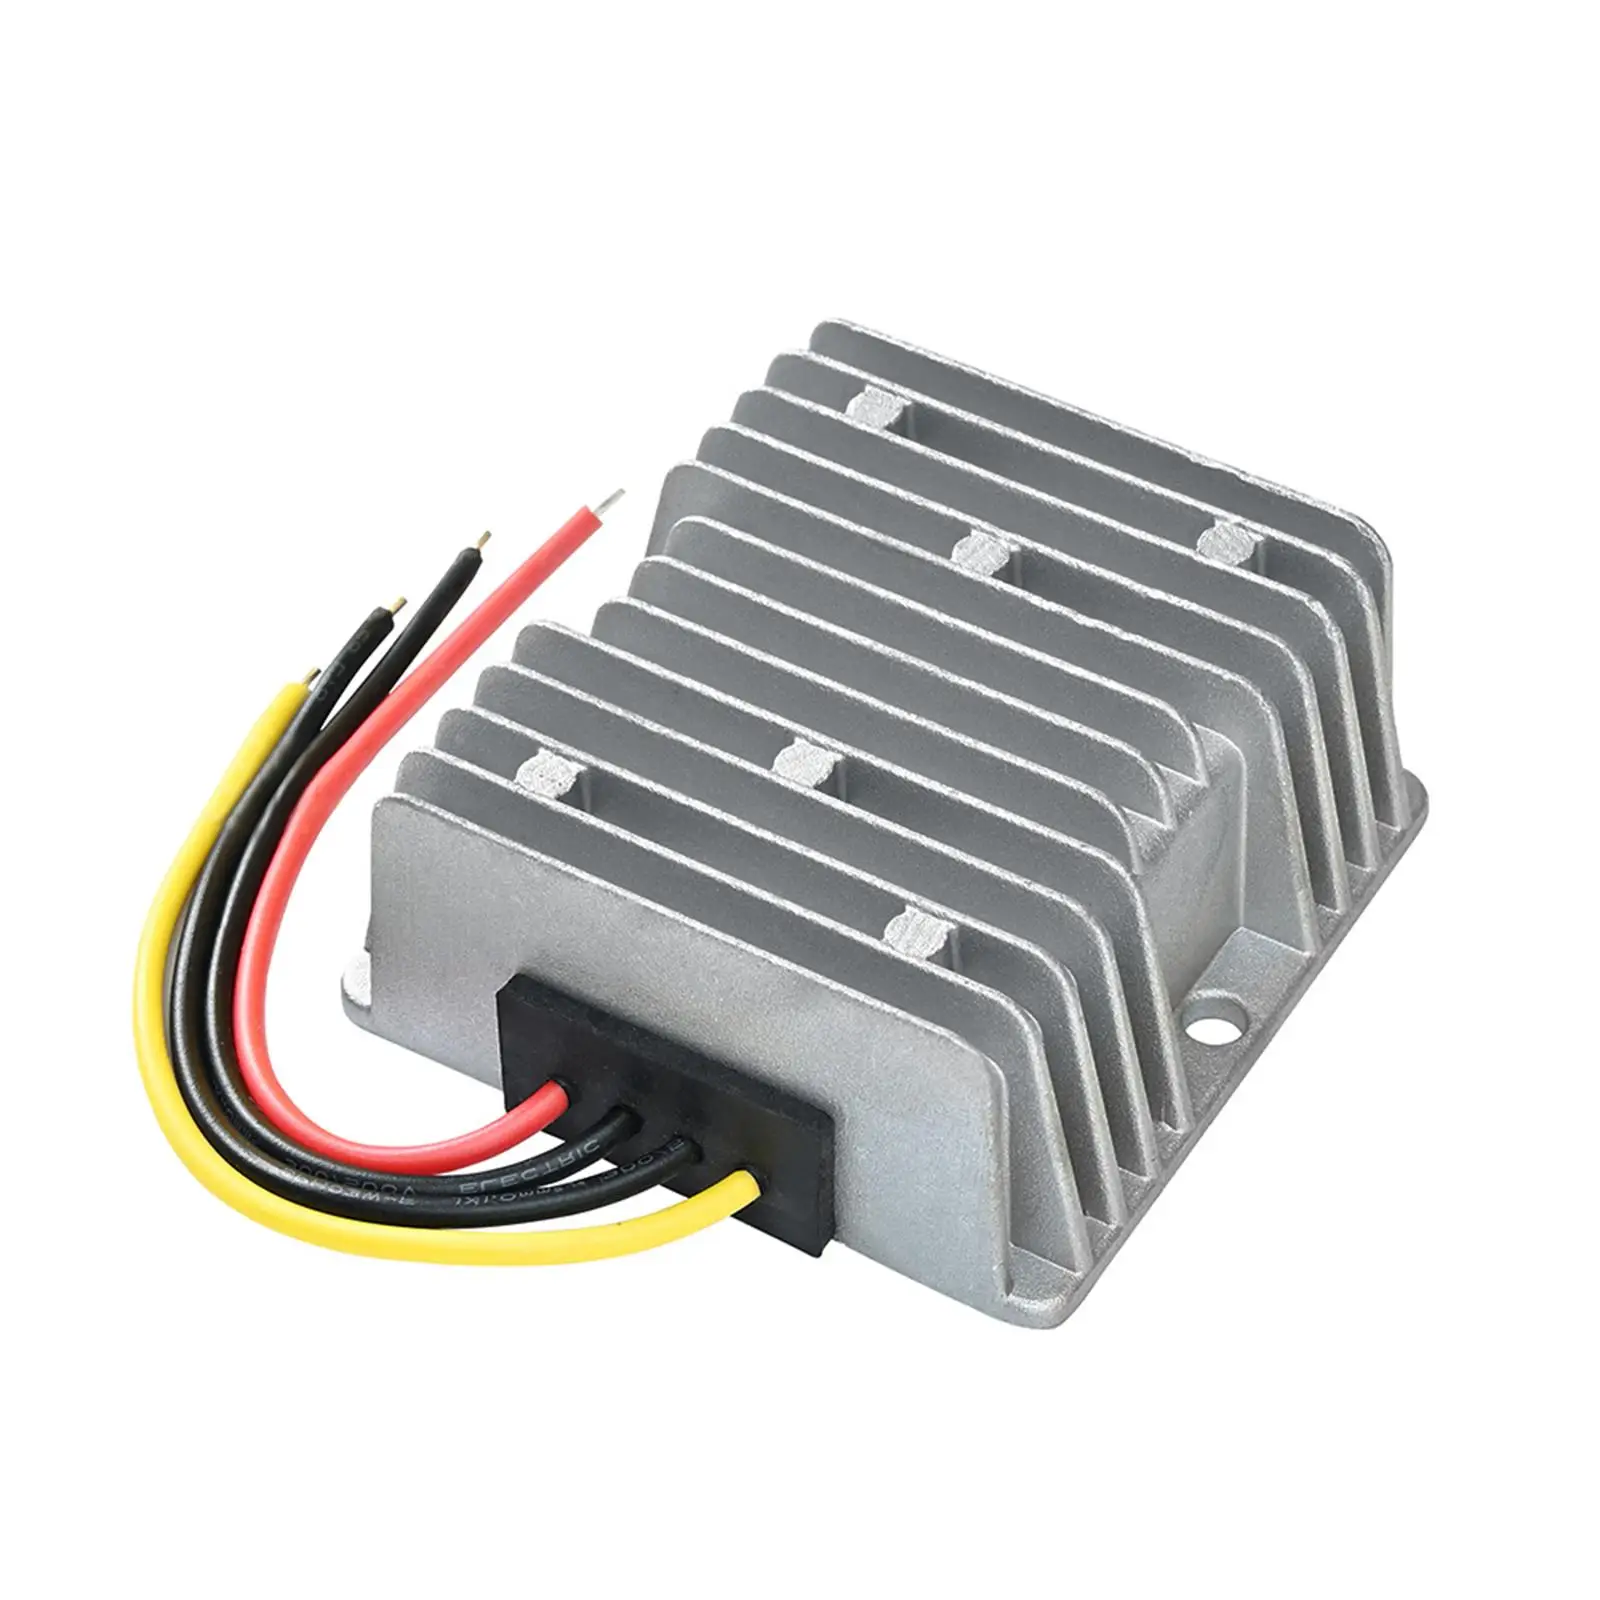 Converter Replaces Automatic Heat Dissipation IP68 Waterproof Voltage Regulator